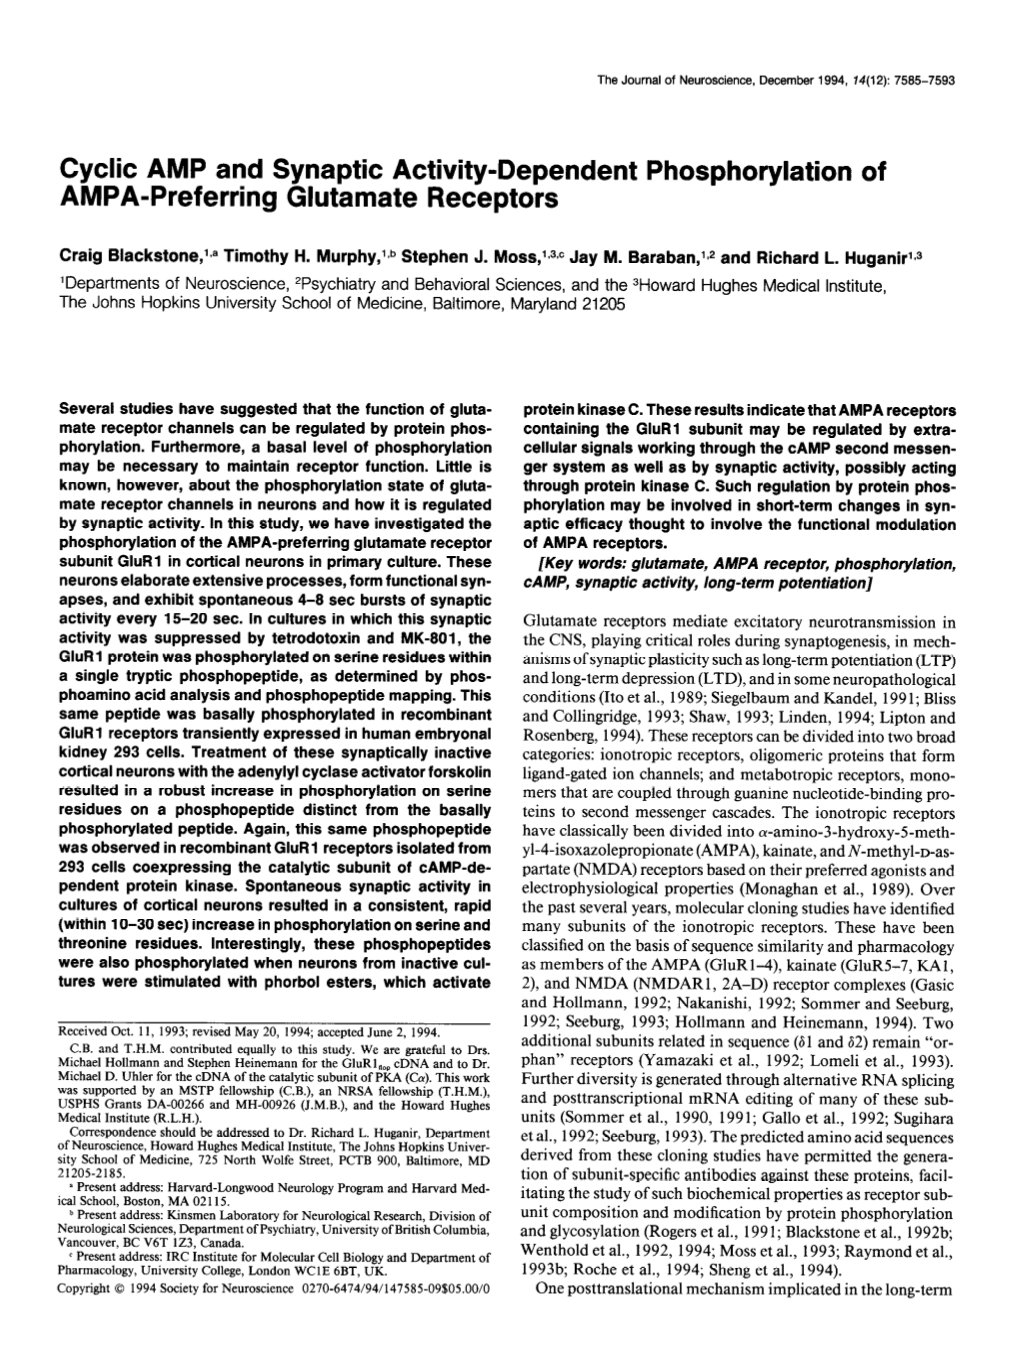 Cyclic AMP and Synaptic Activity-Dependent Phosphorylation of AMPA-Preferring Glutamate Receptors